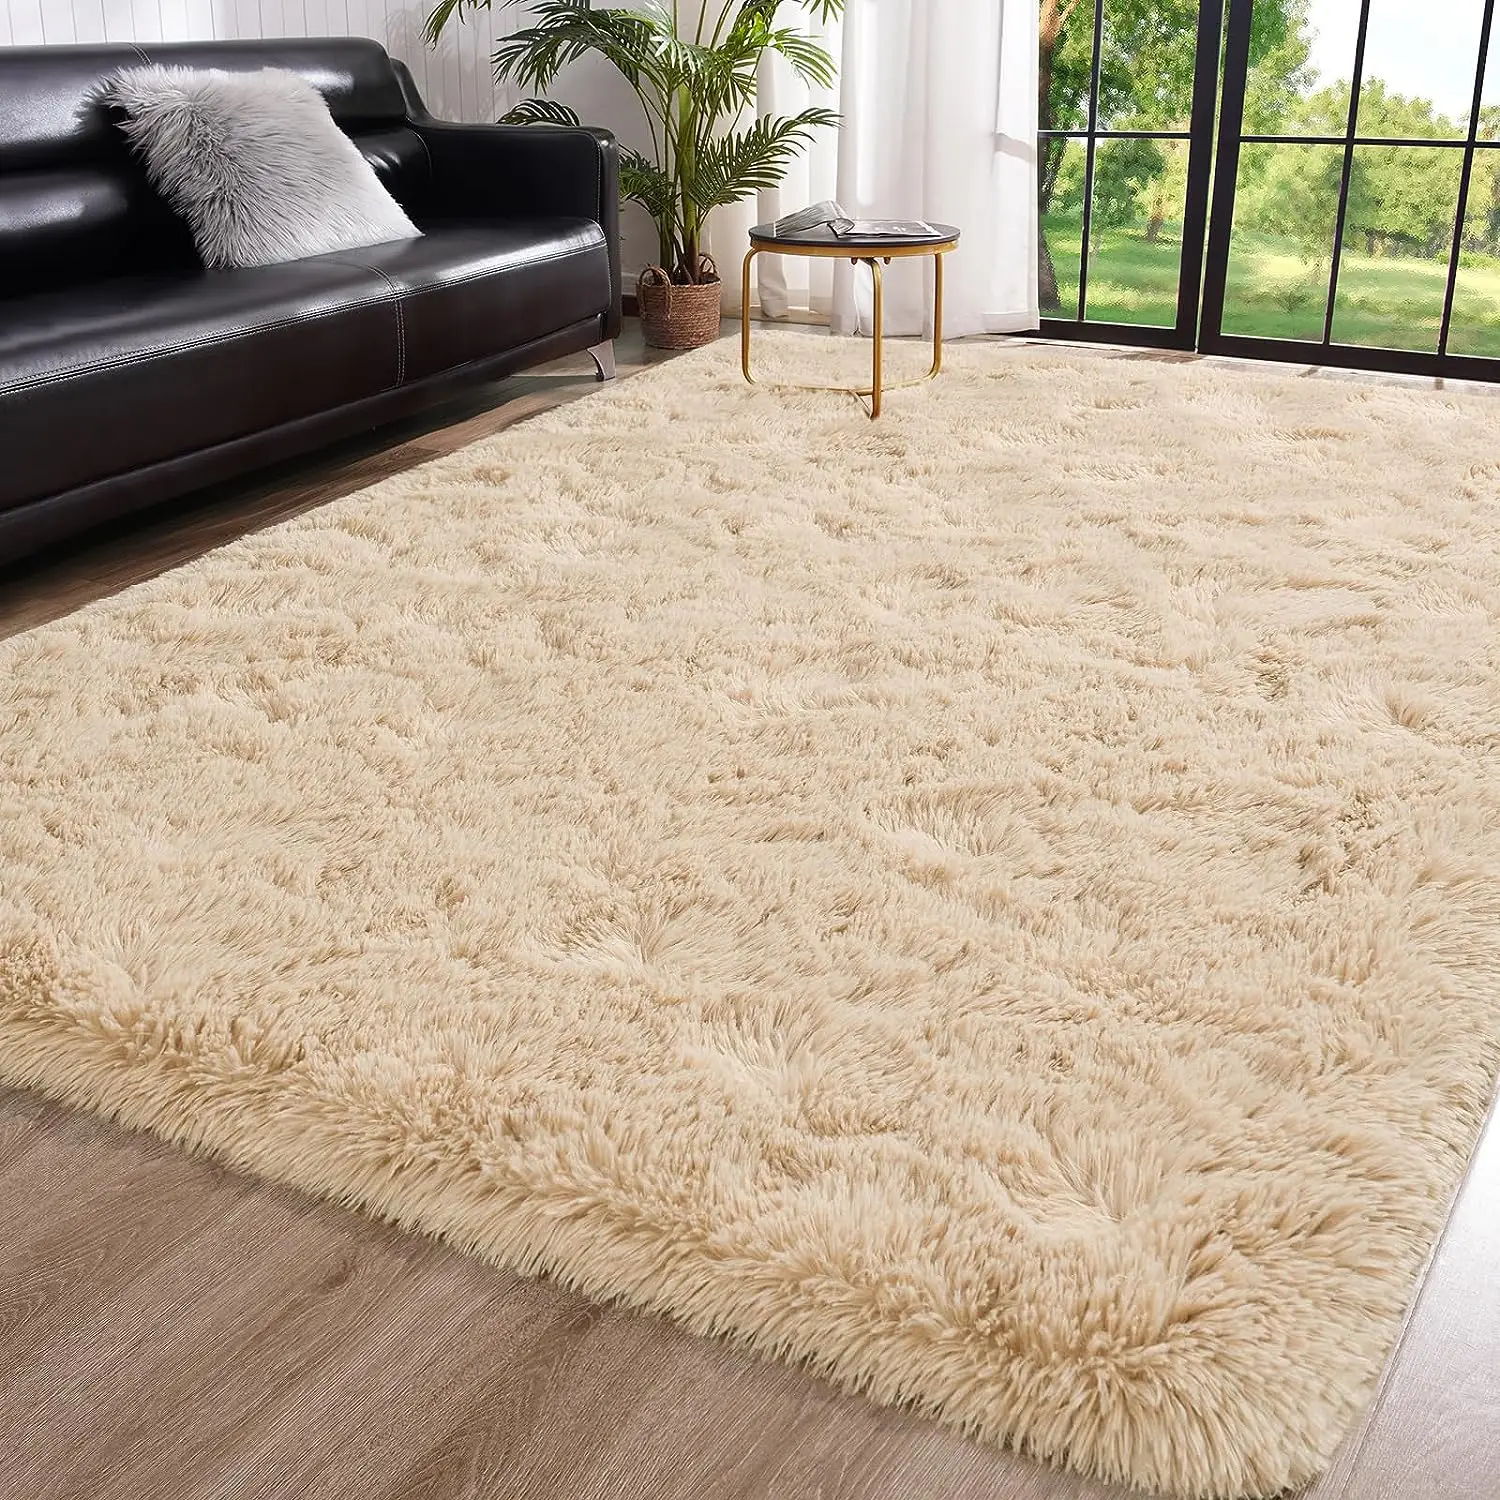 

Plush Fuzzy Rugs Fluffy Bedroom Carpet for Kids Room Living Room Soft Shaggy Nursery Rug Furry Floor Carpet Modern Decor Cute